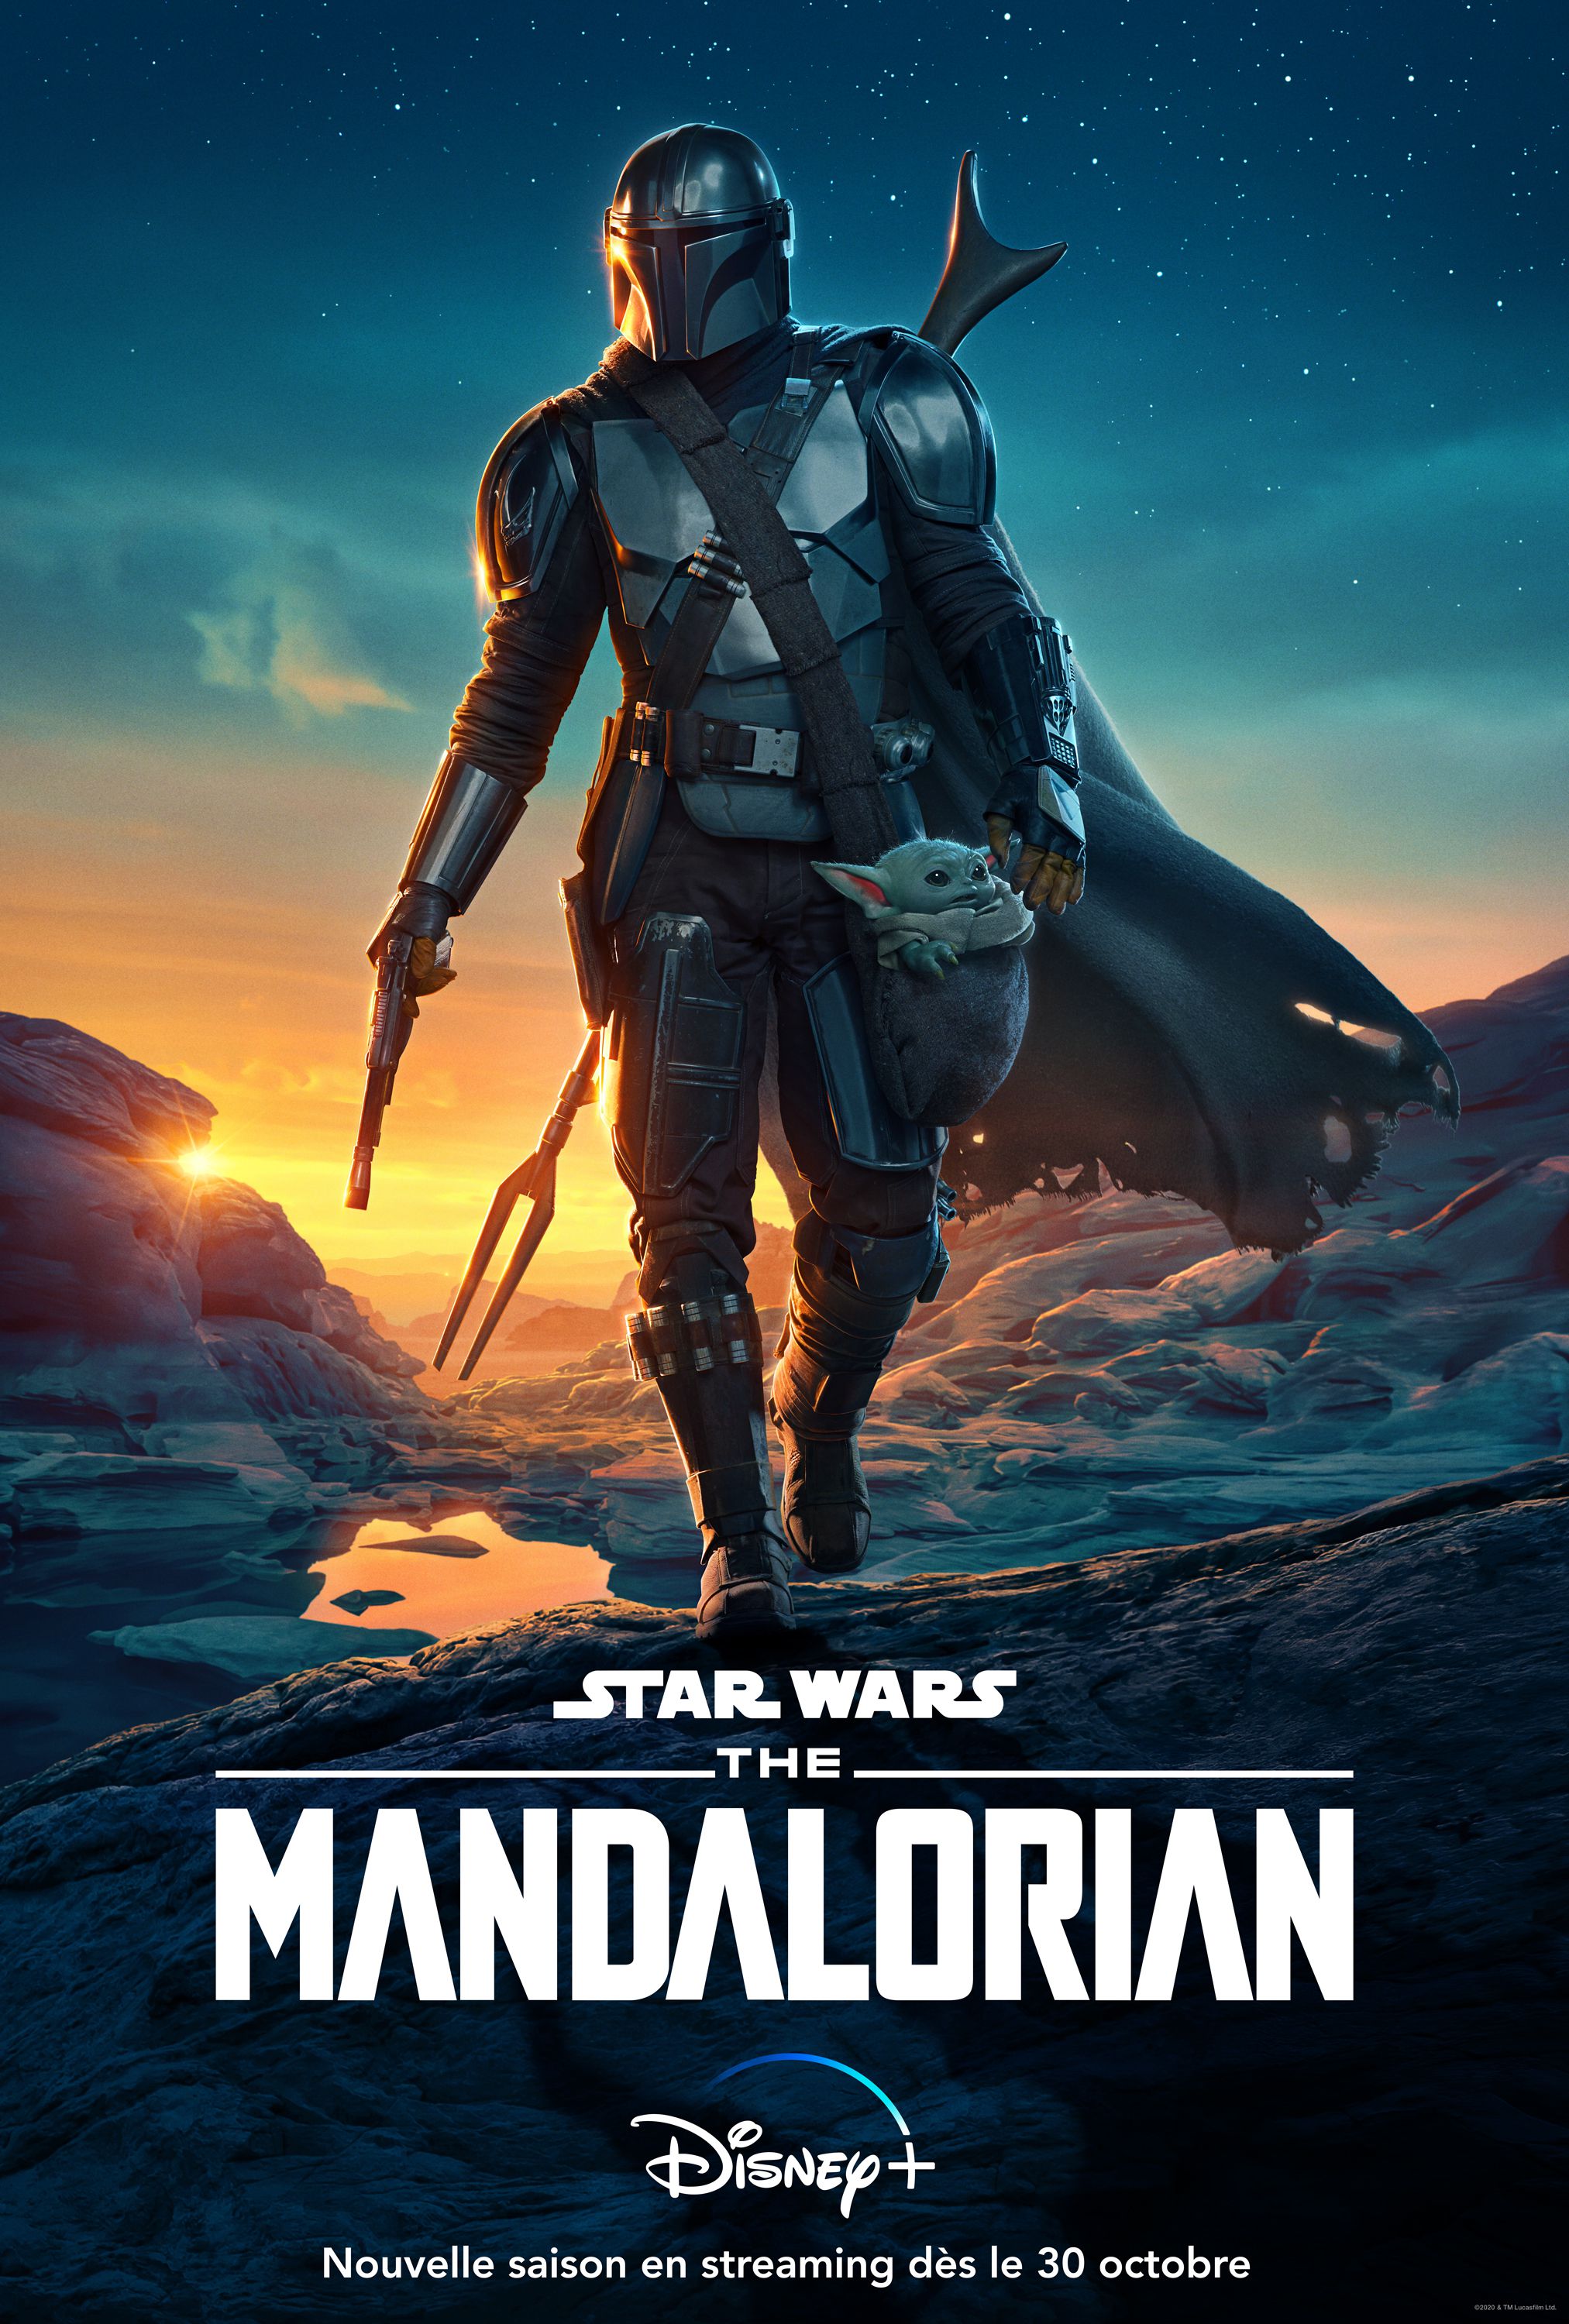 The Mandalorian - Série (2019) streaming VF gratuit complet